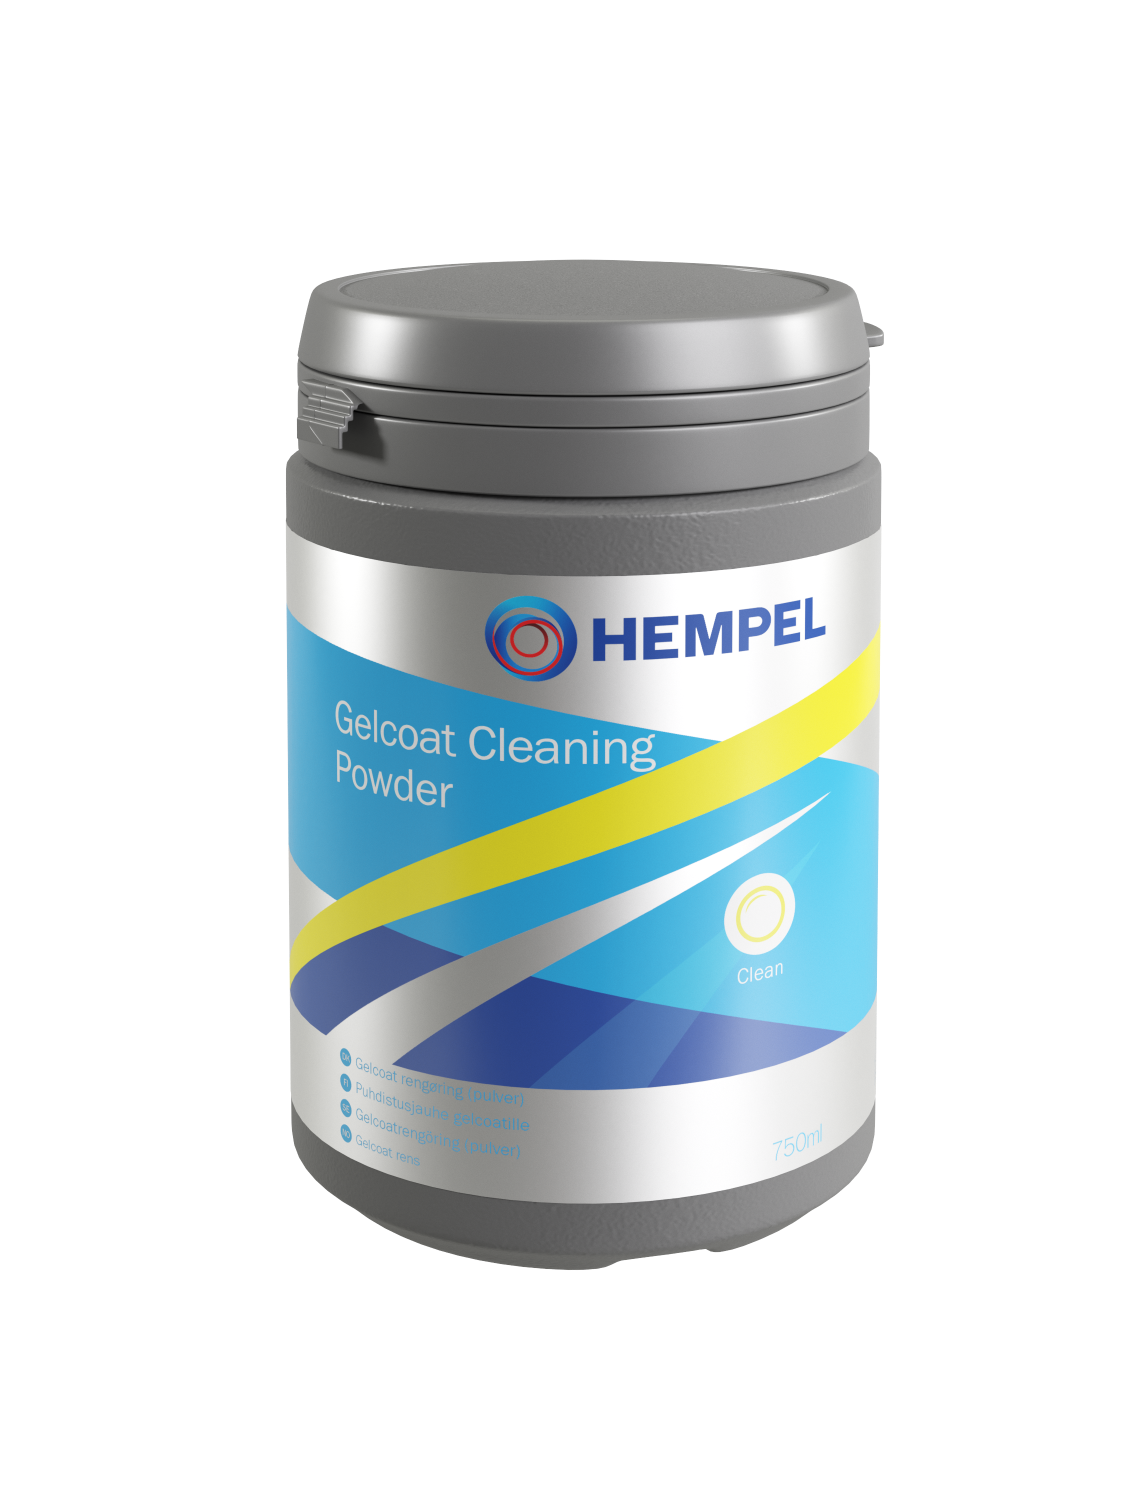 Hempel Gelcoat Cleaning Powder 750 ml.